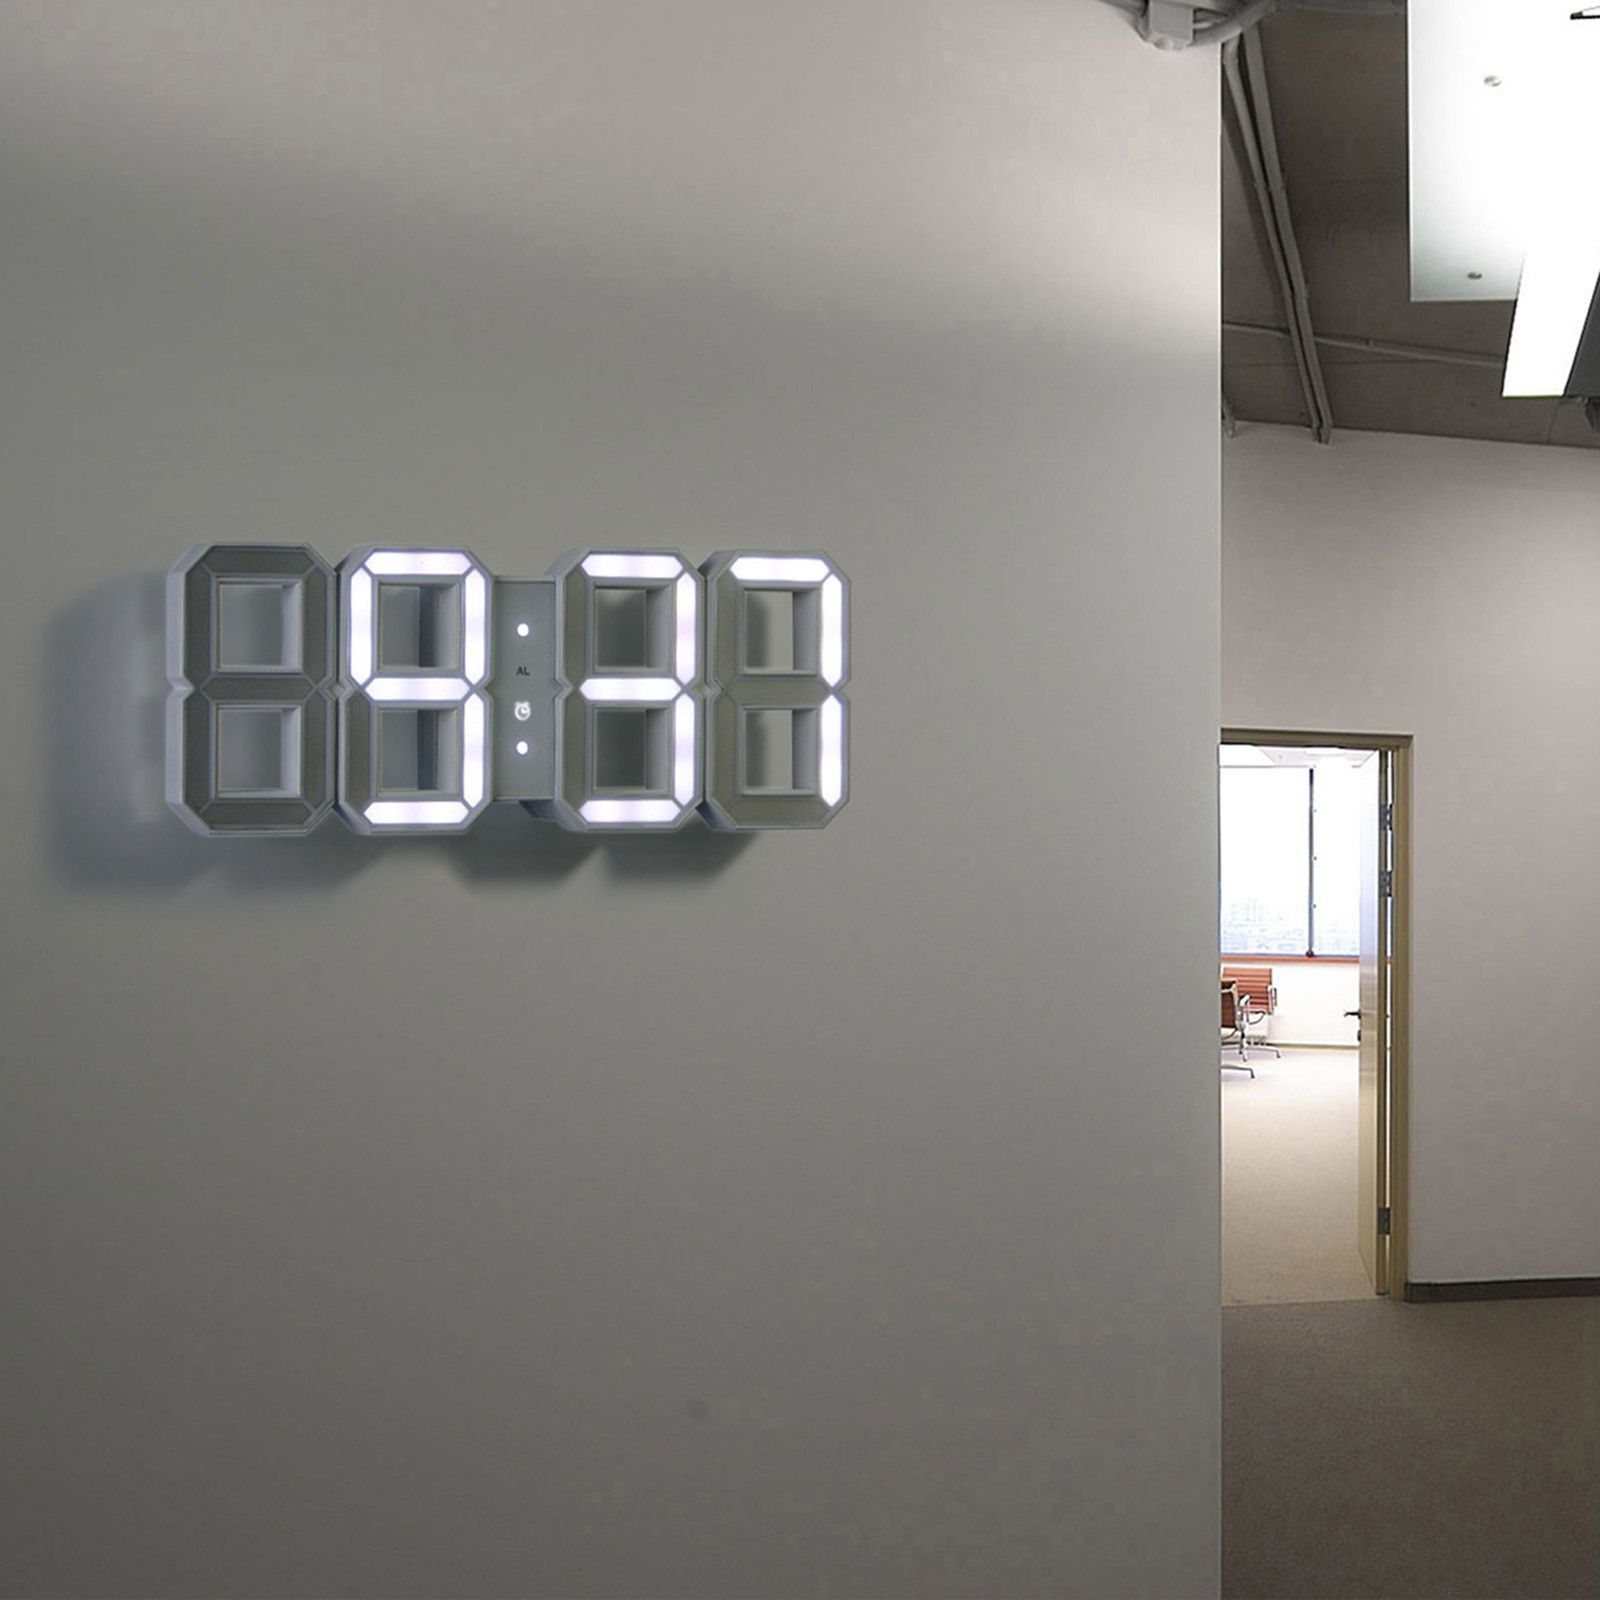 Digital wall clock 36